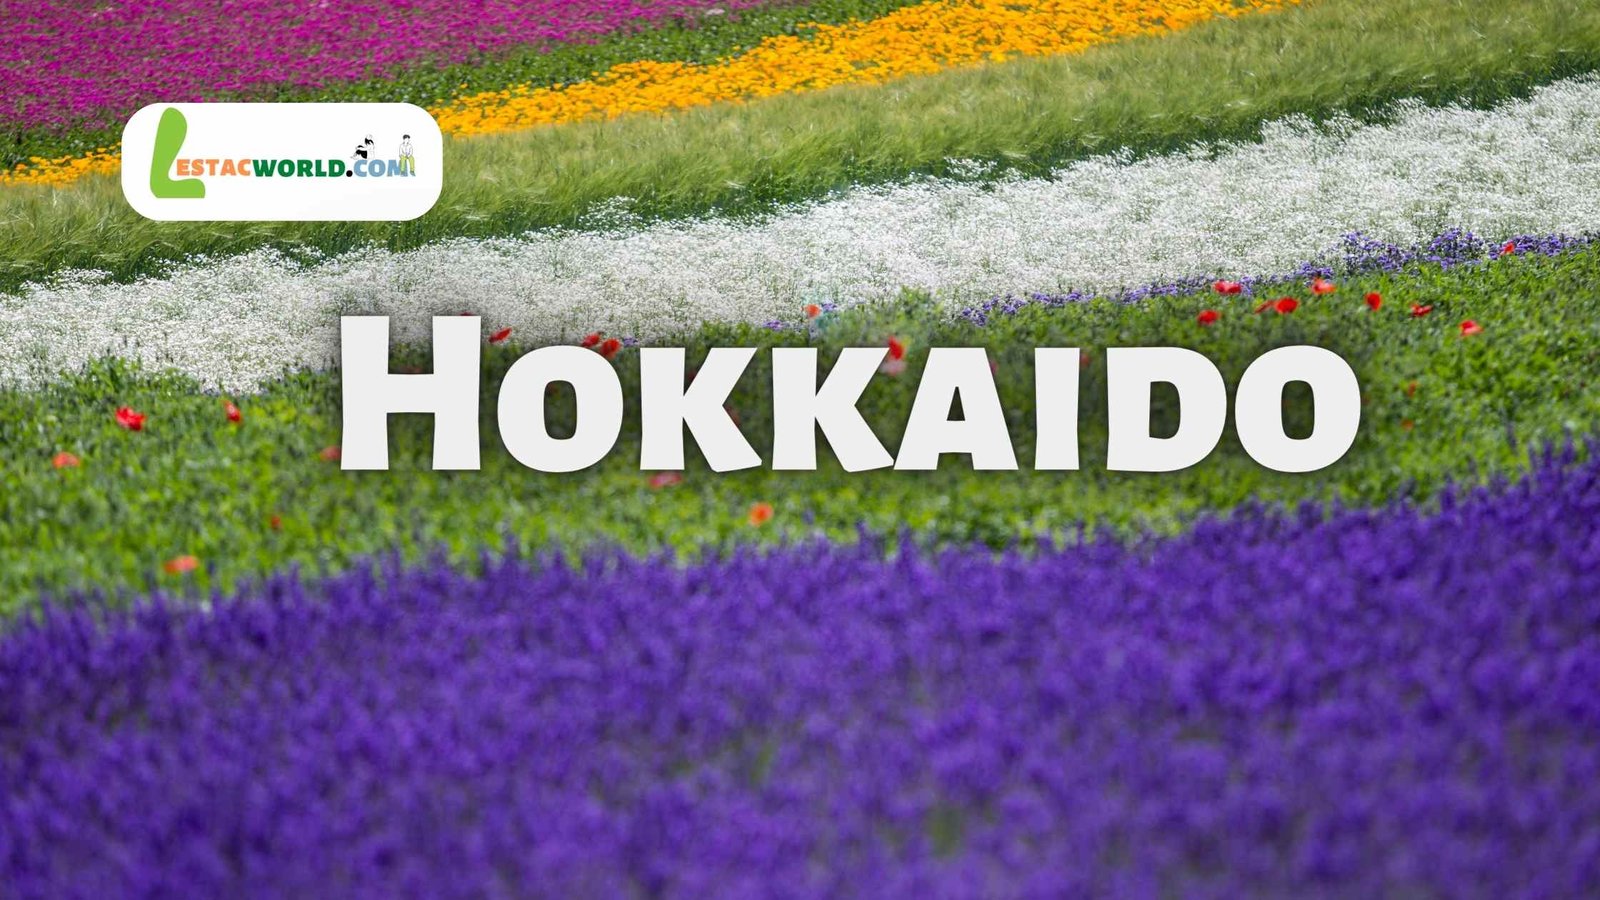 A field of colorful flowers in Hokkaido, Japan